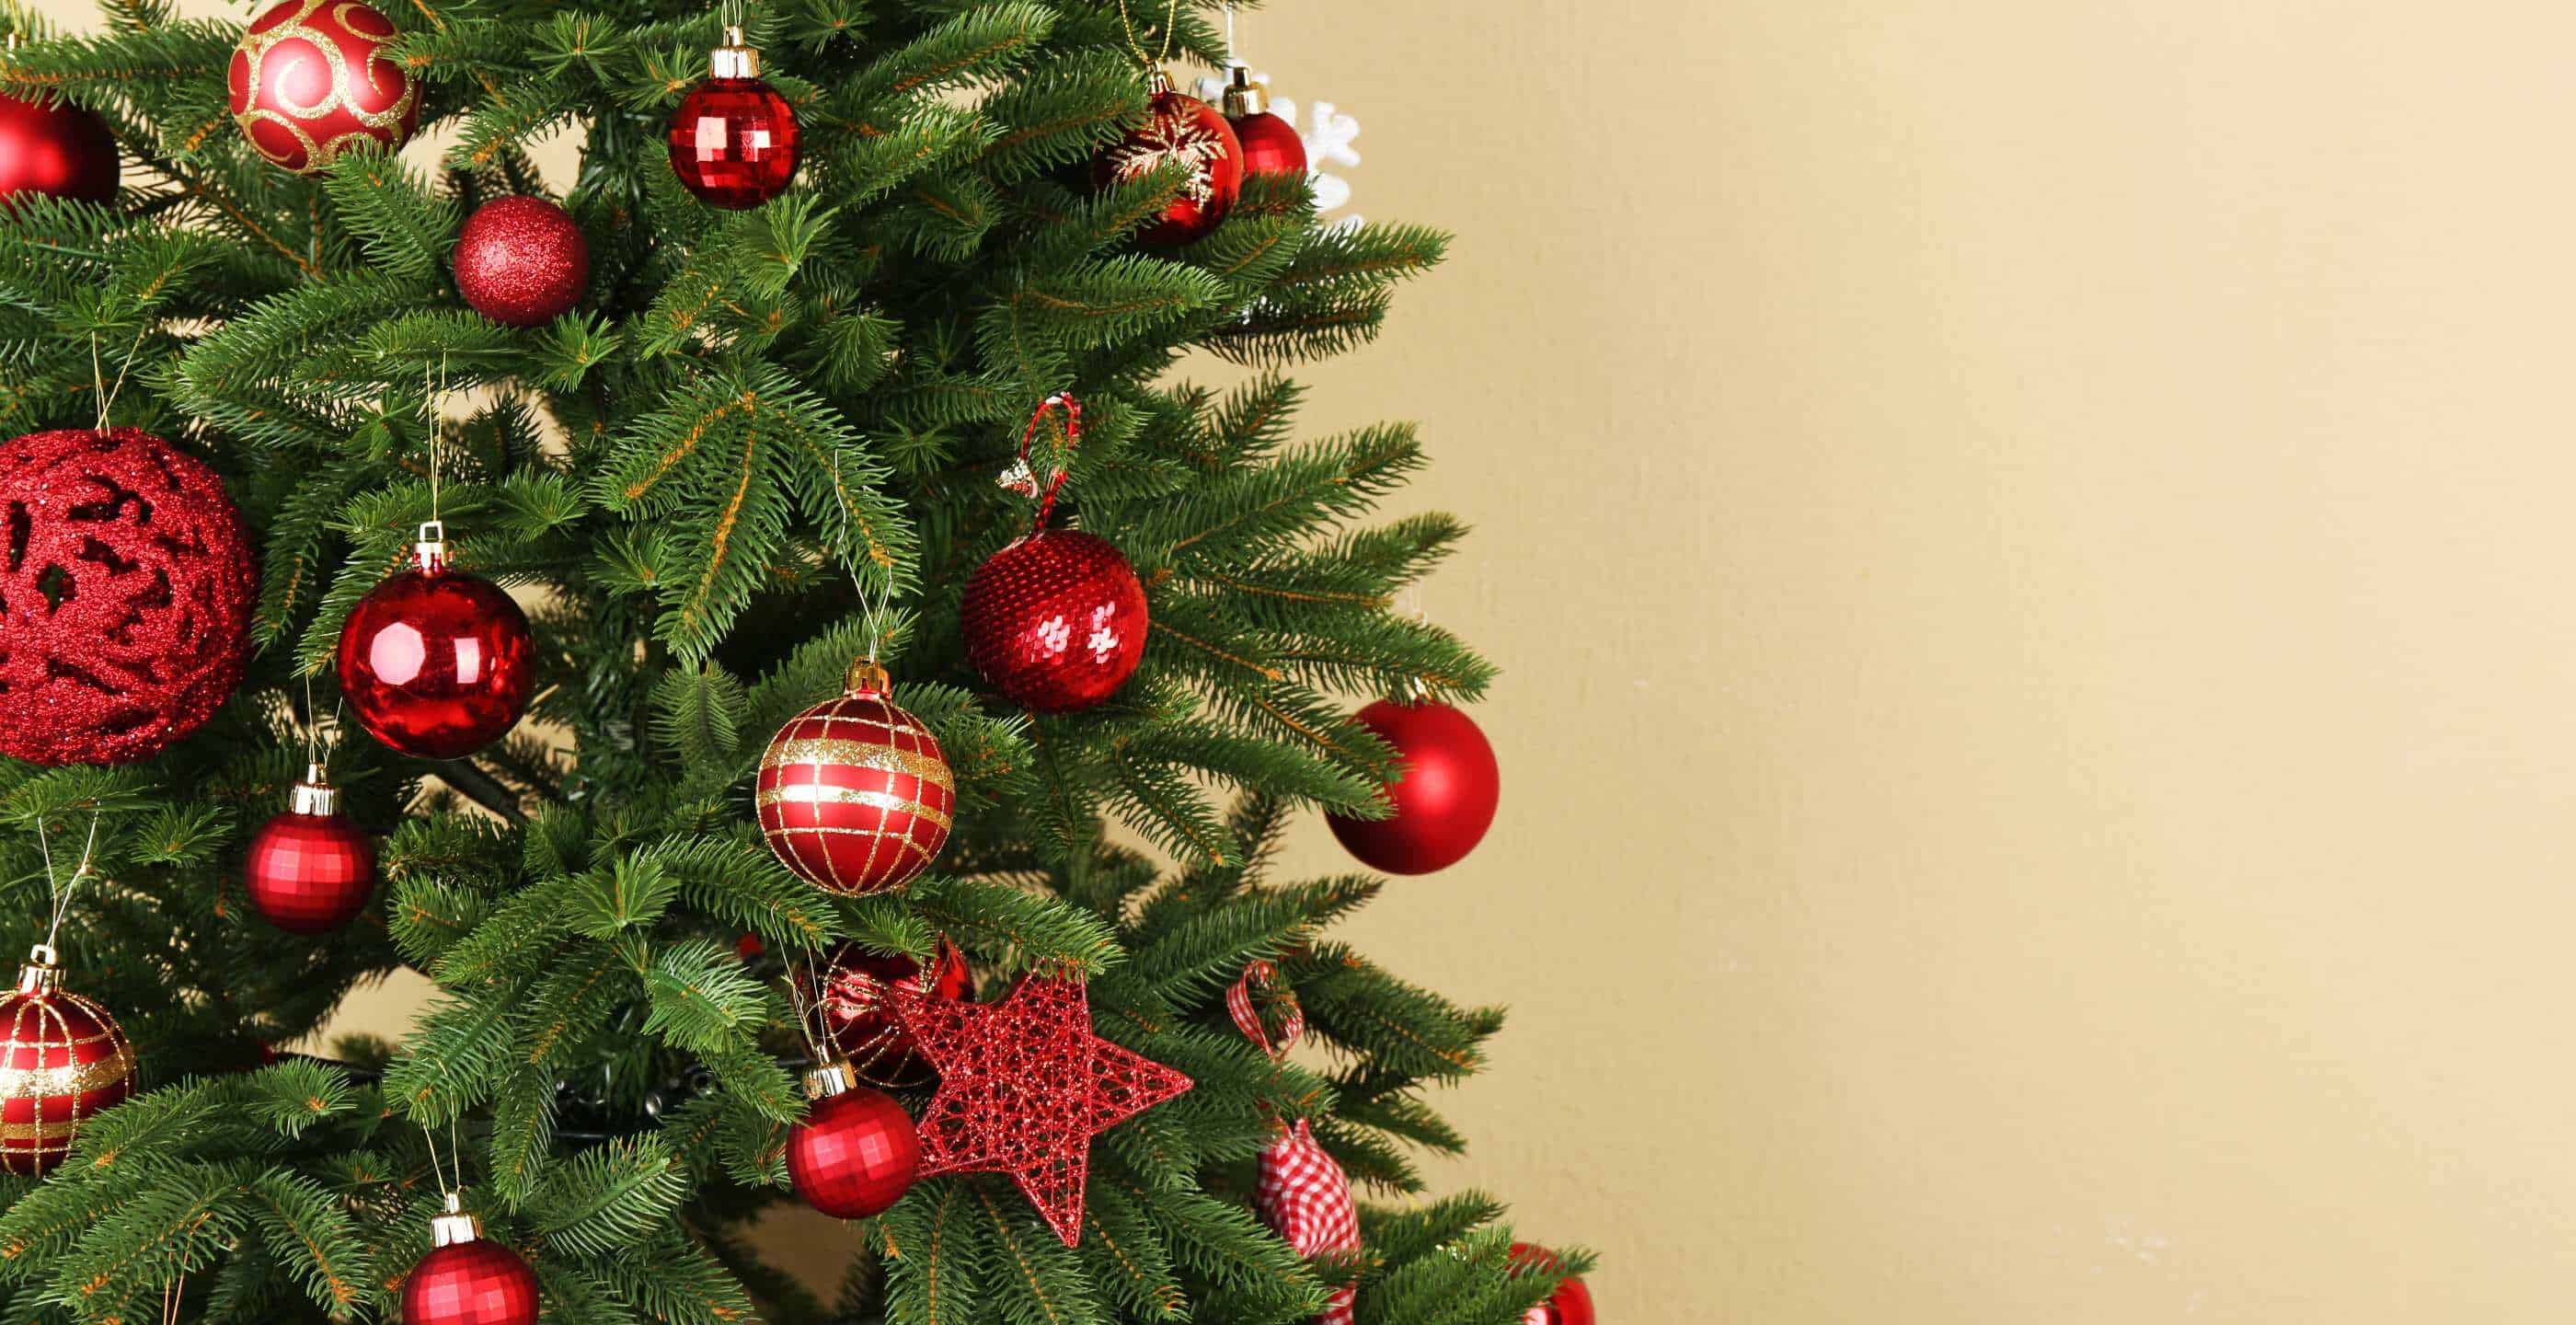 The Christmas Tree - Historic UK